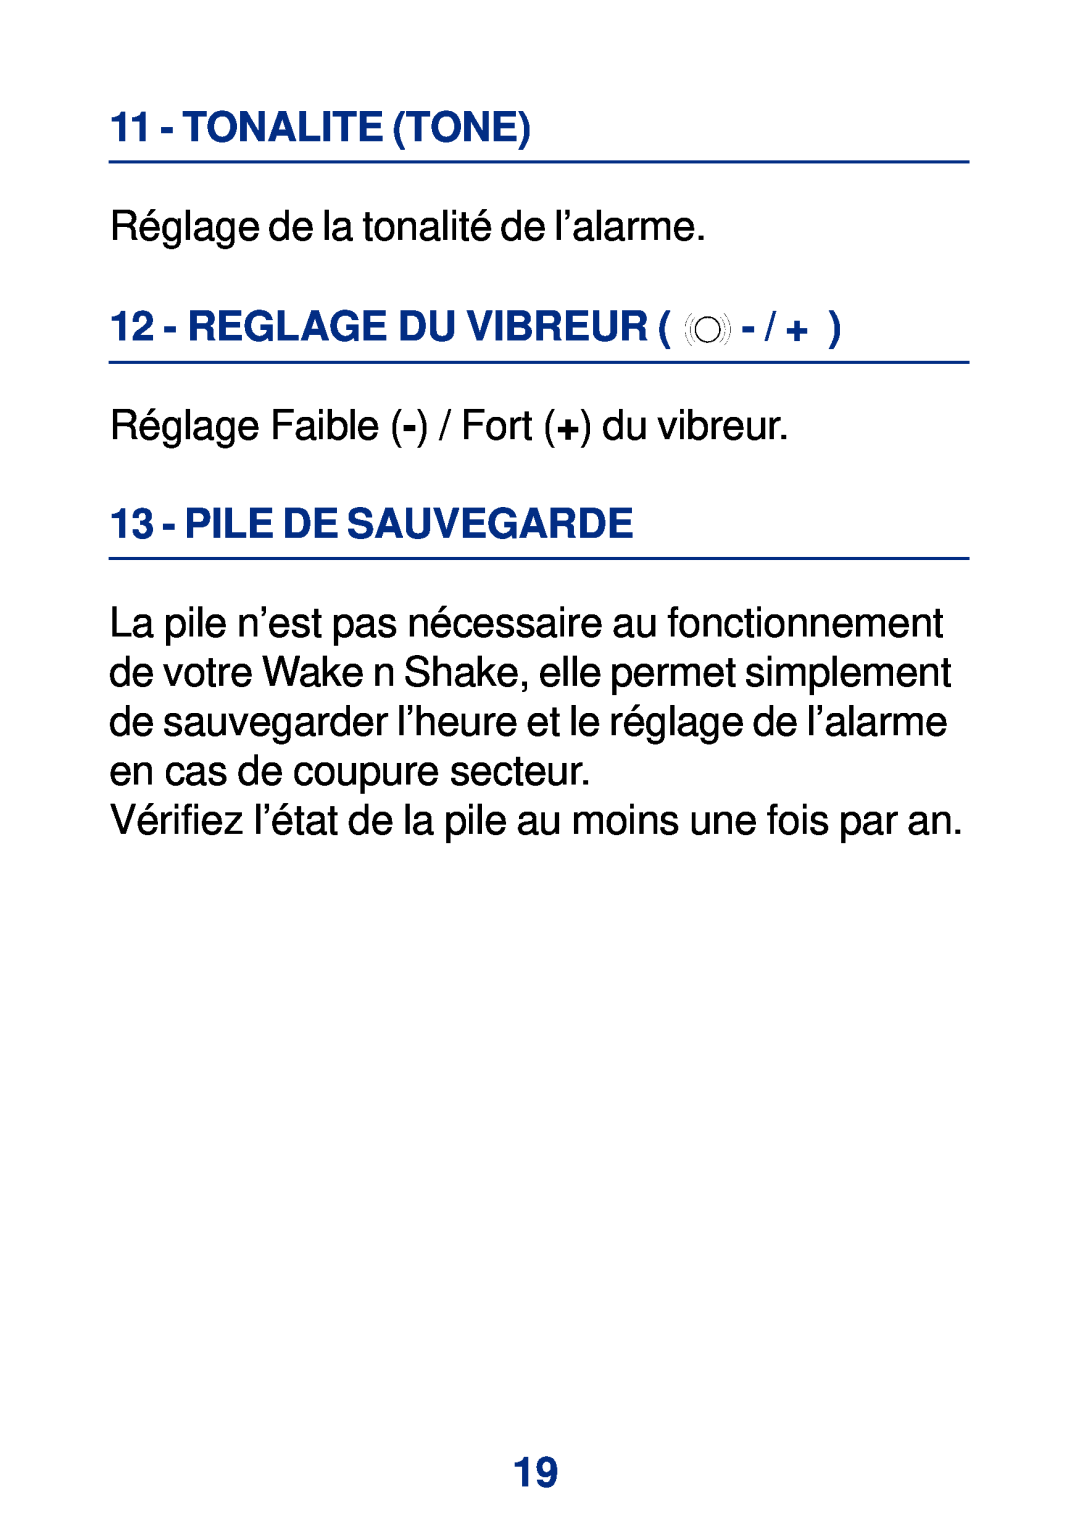 Geemarc Large Display Alarm Clock manual Tonalite Tone, Reglage Du Vibreur - / +, Pile De Sauvegarde 